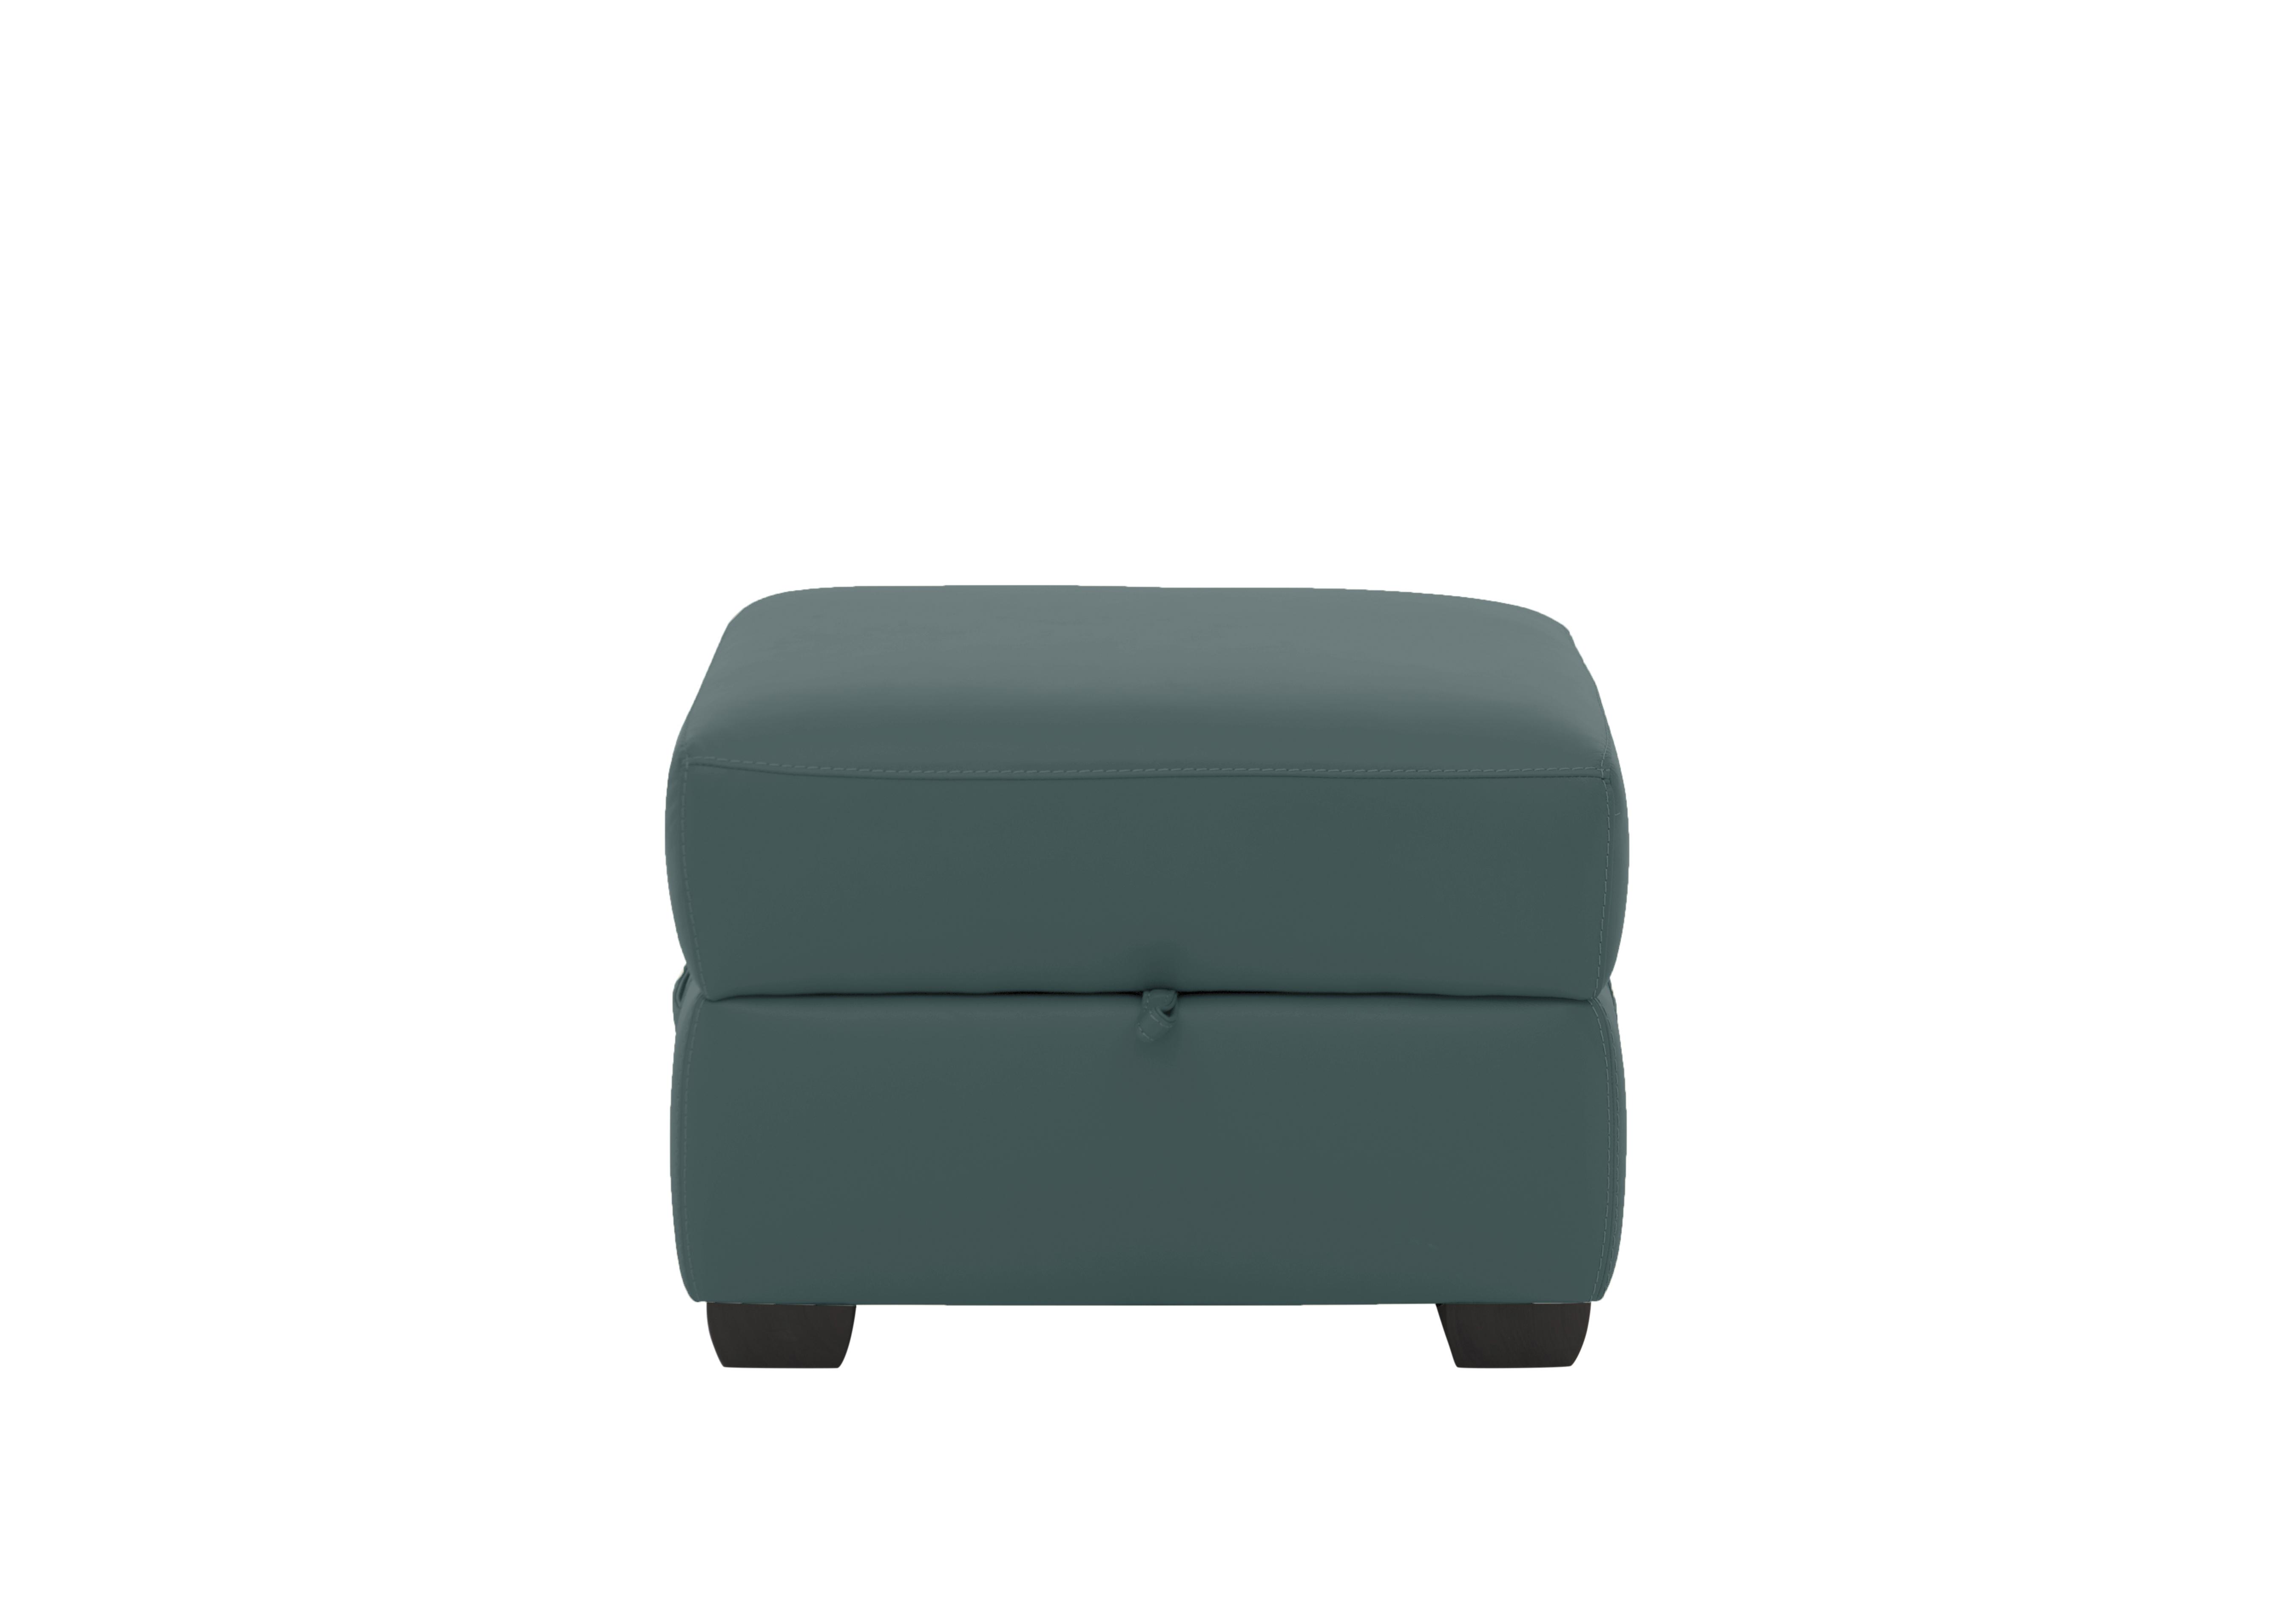 Missouri Leather Storage Footstool in Bv-301e Lake Green on Furniture Village